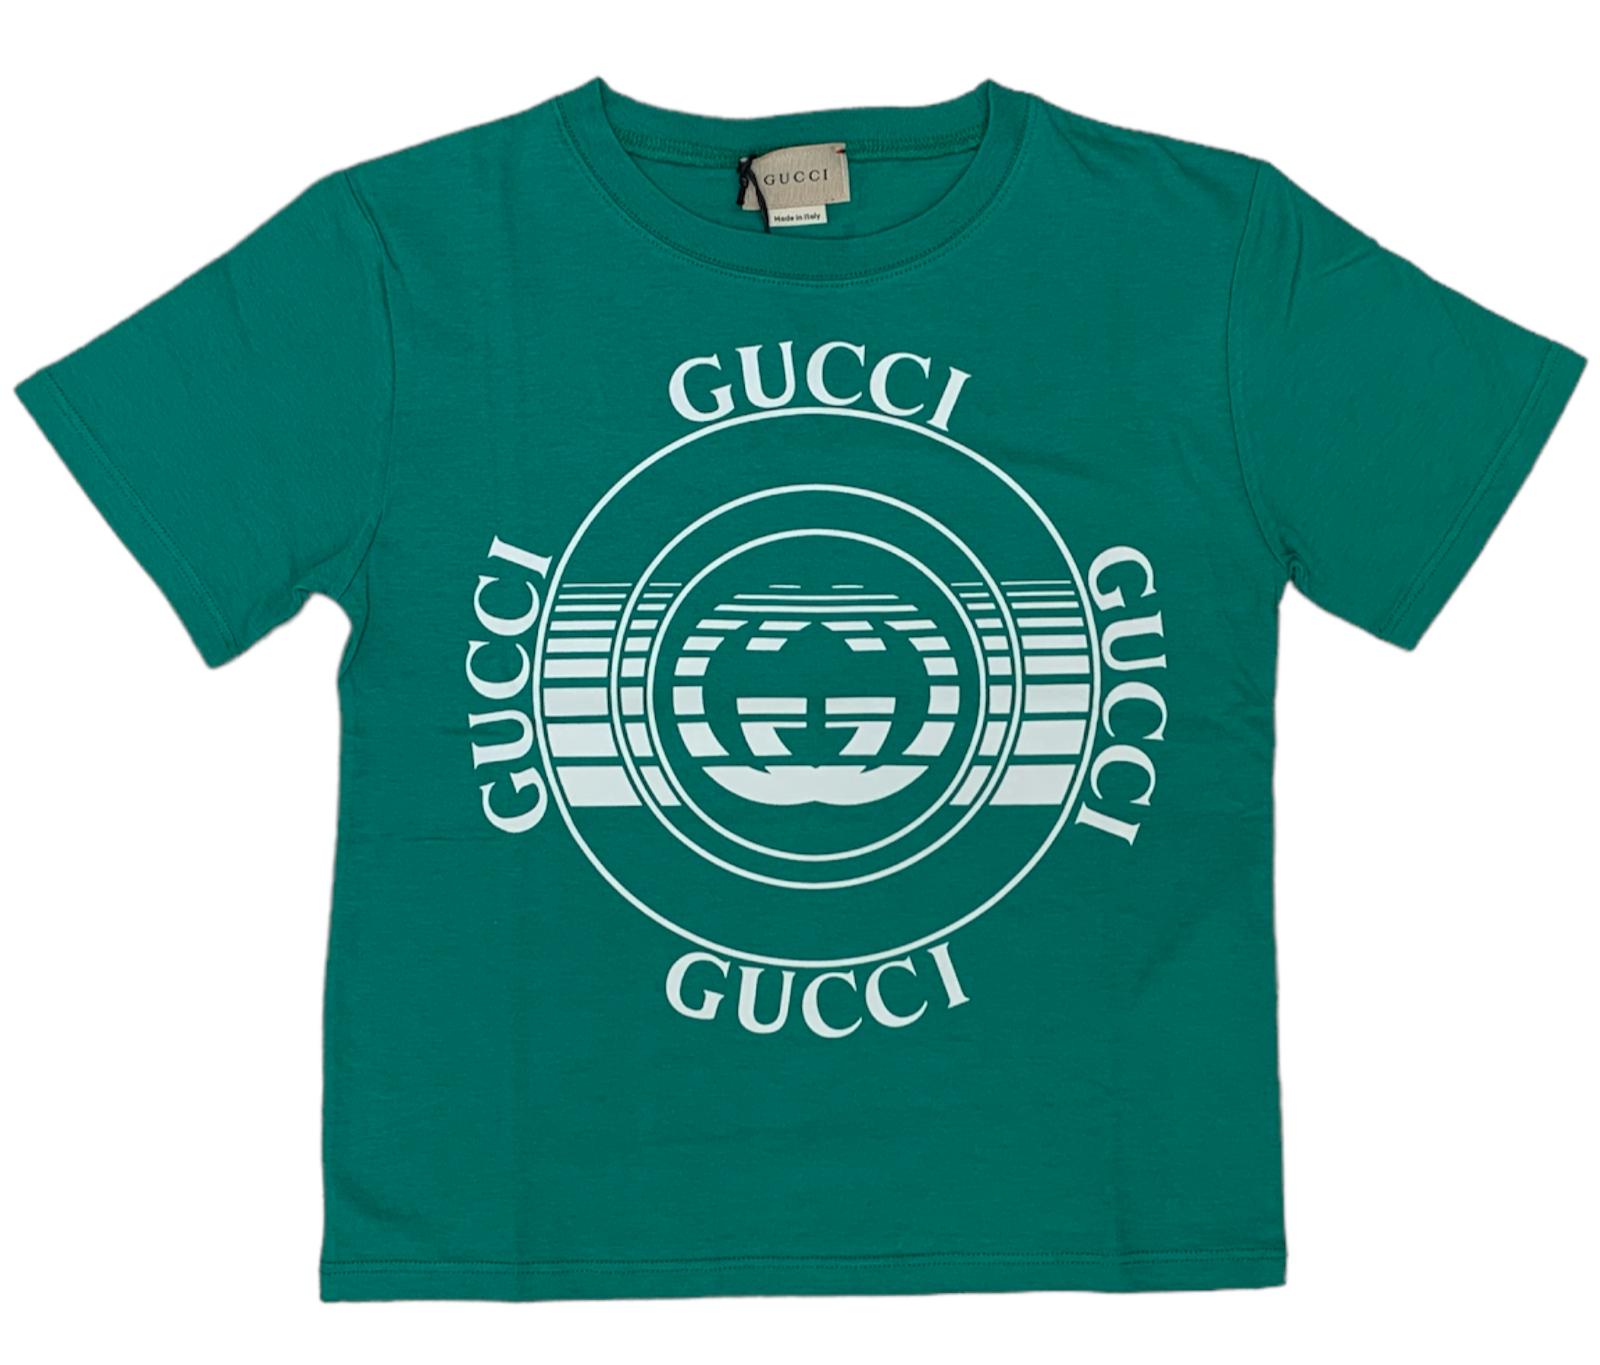 Gucci t-shirt